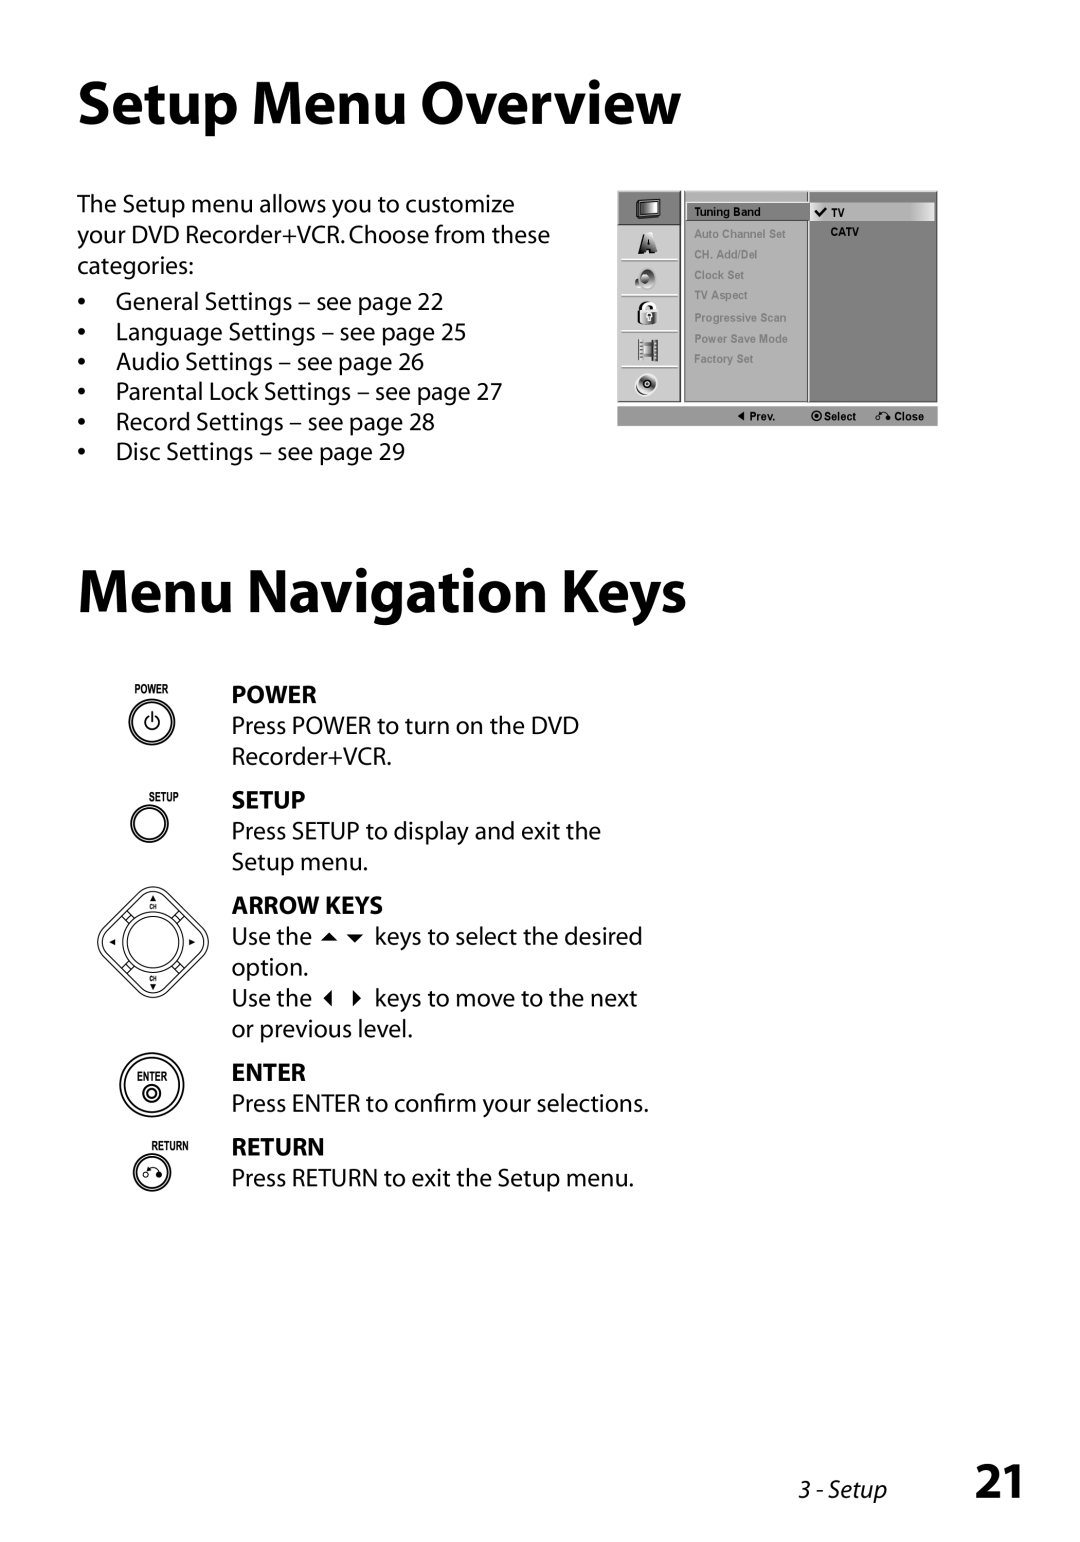 GoVideo VR3845 manual Setup Menu Overview, Menu Navigation Keys, Press Setup to display and exit Setup menu 